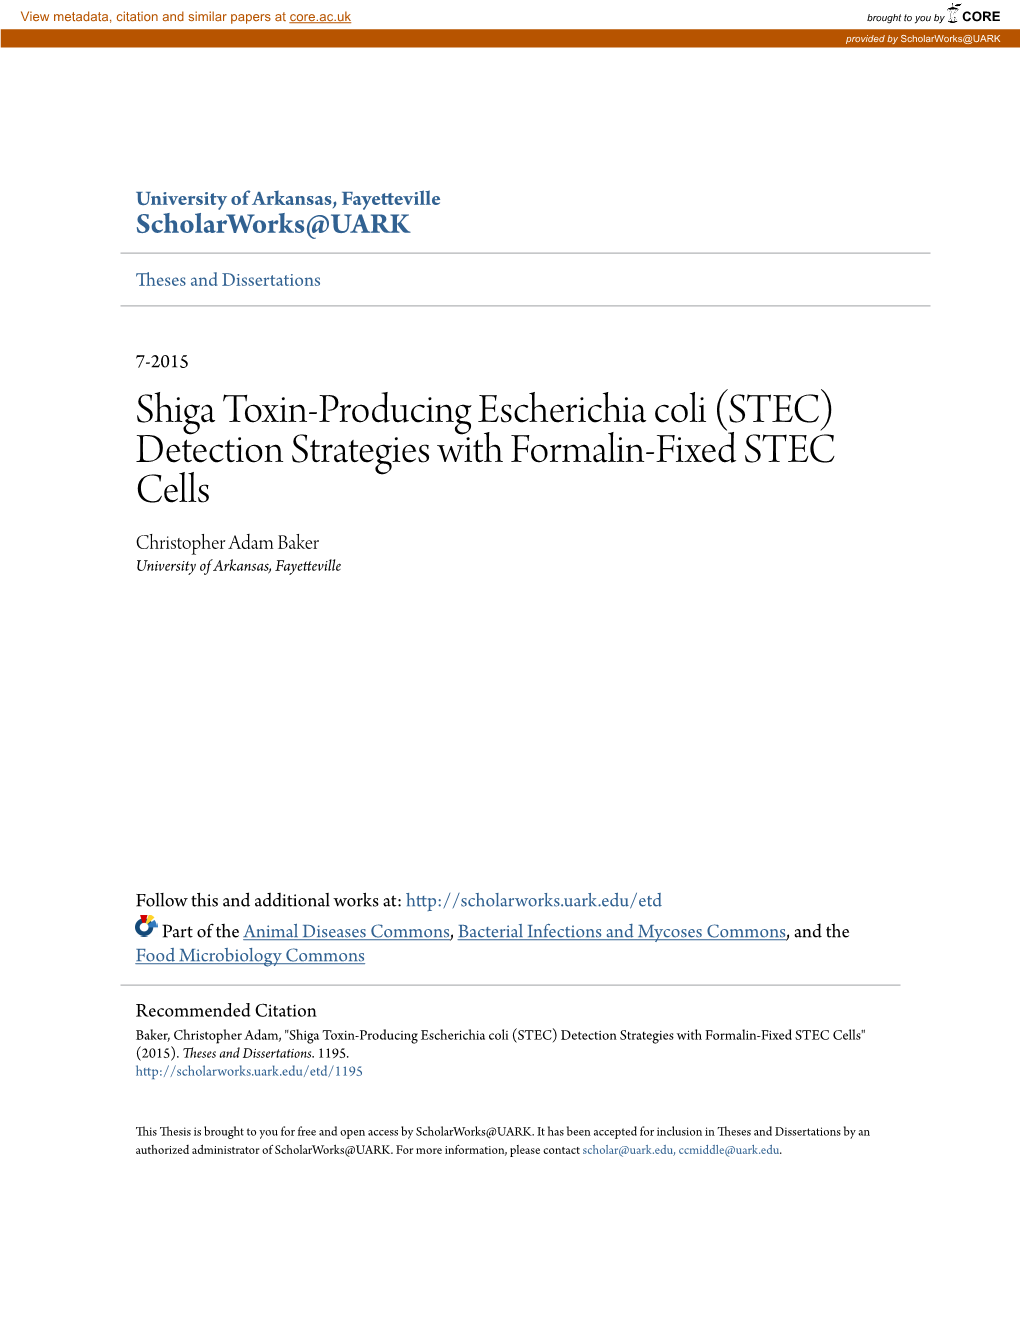 Shiga Toxin-Producing Escherichia Coli (STEC) Detection Strategies with Formalin-Fixed STEC Cells Christopher Adam Baker University of Arkansas, Fayetteville